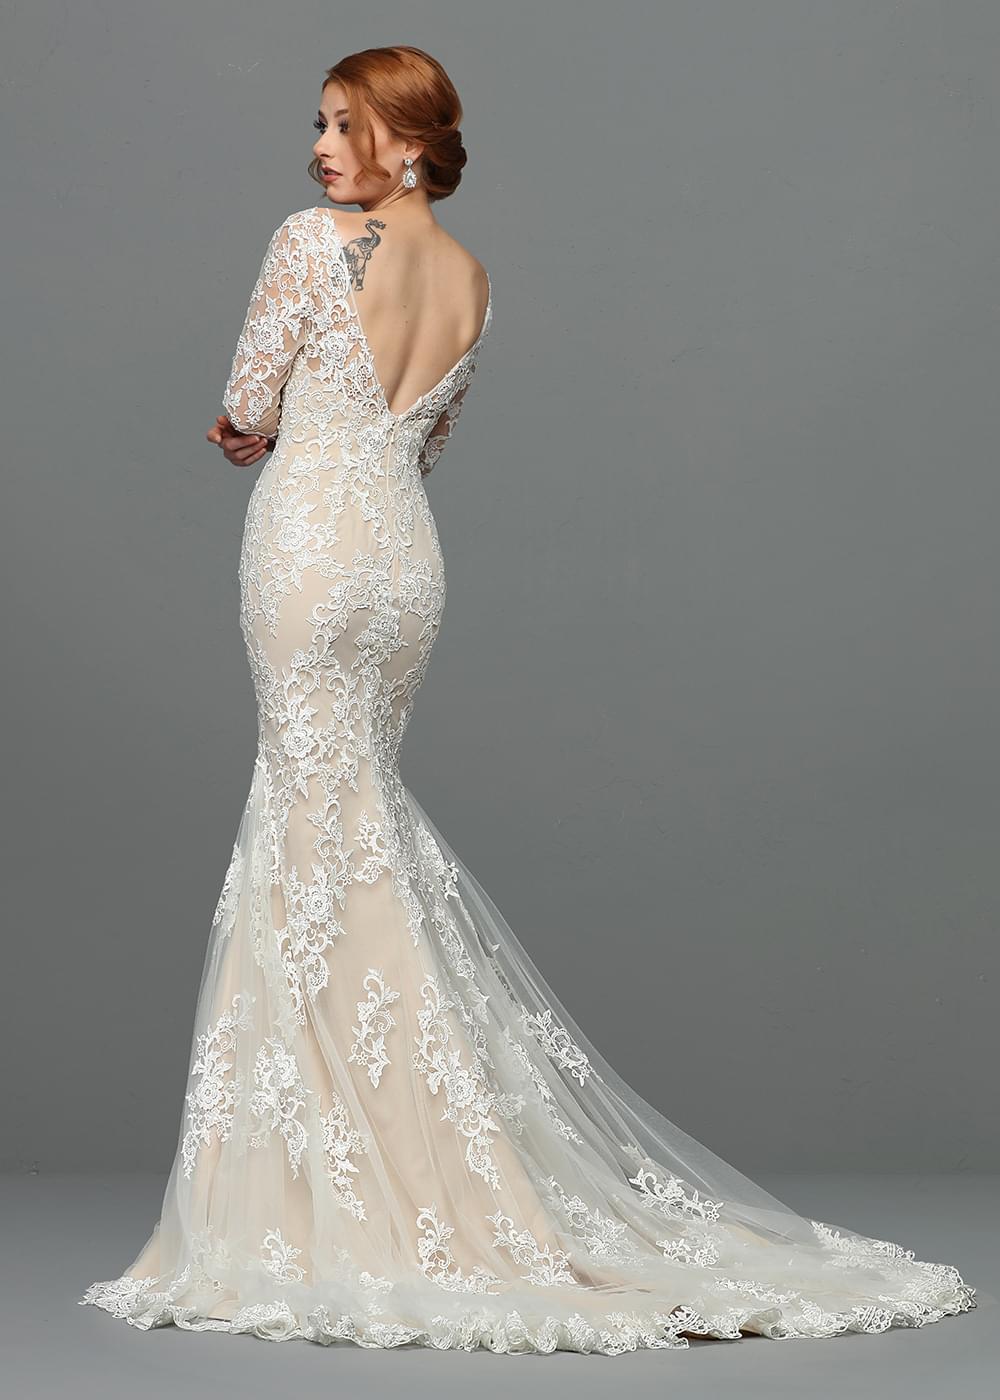 Brianna Wedding Dress – Avery Austin